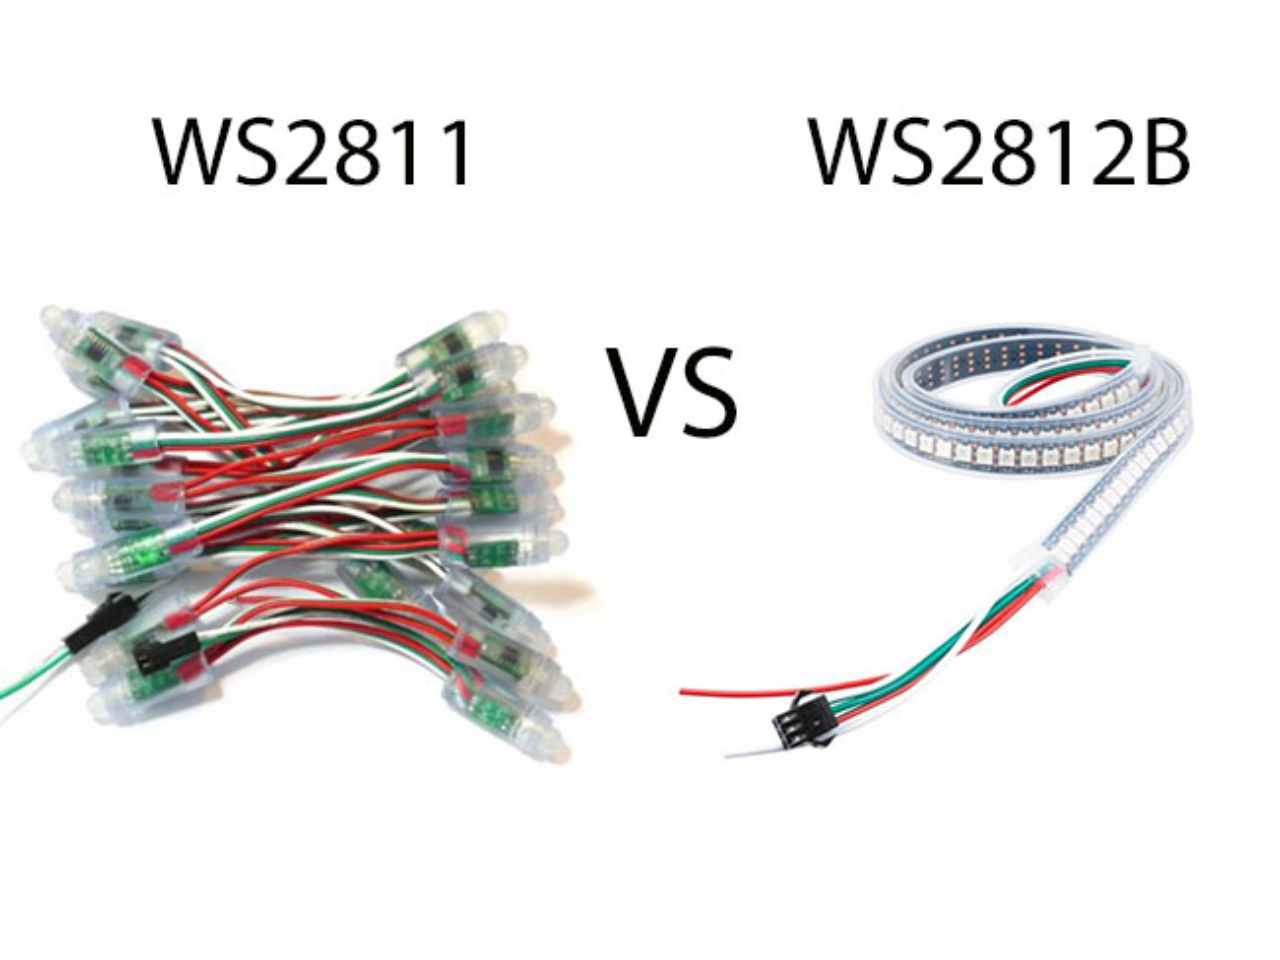 WS2811 VS WS2812B